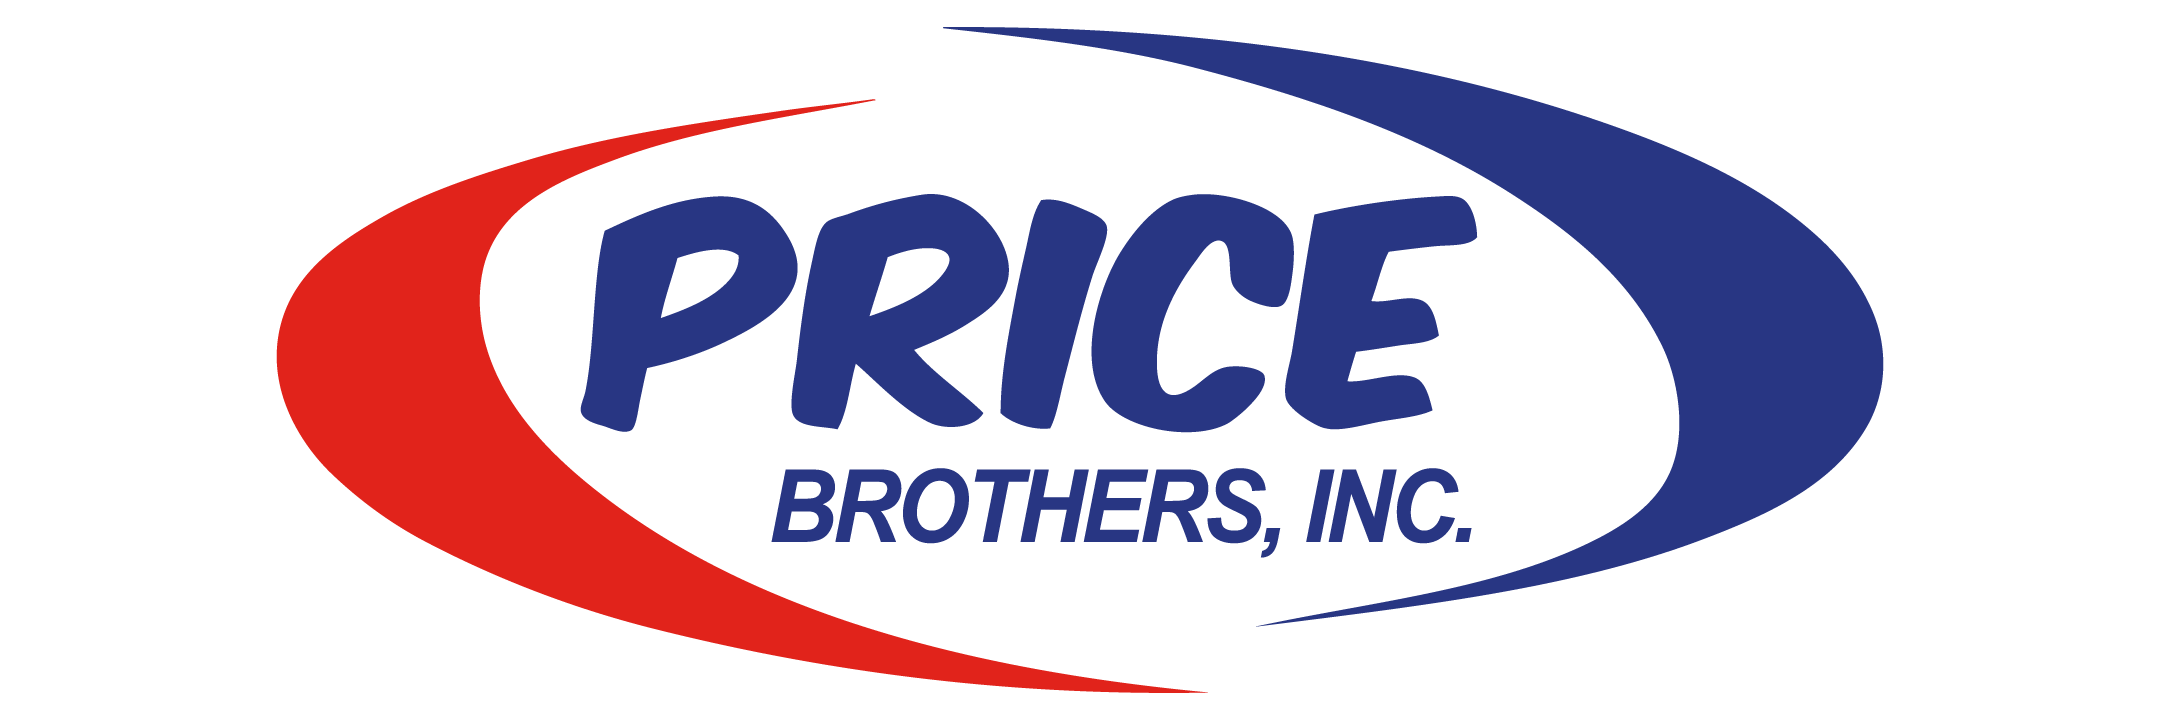 4. Price Brothers (Tier 4)